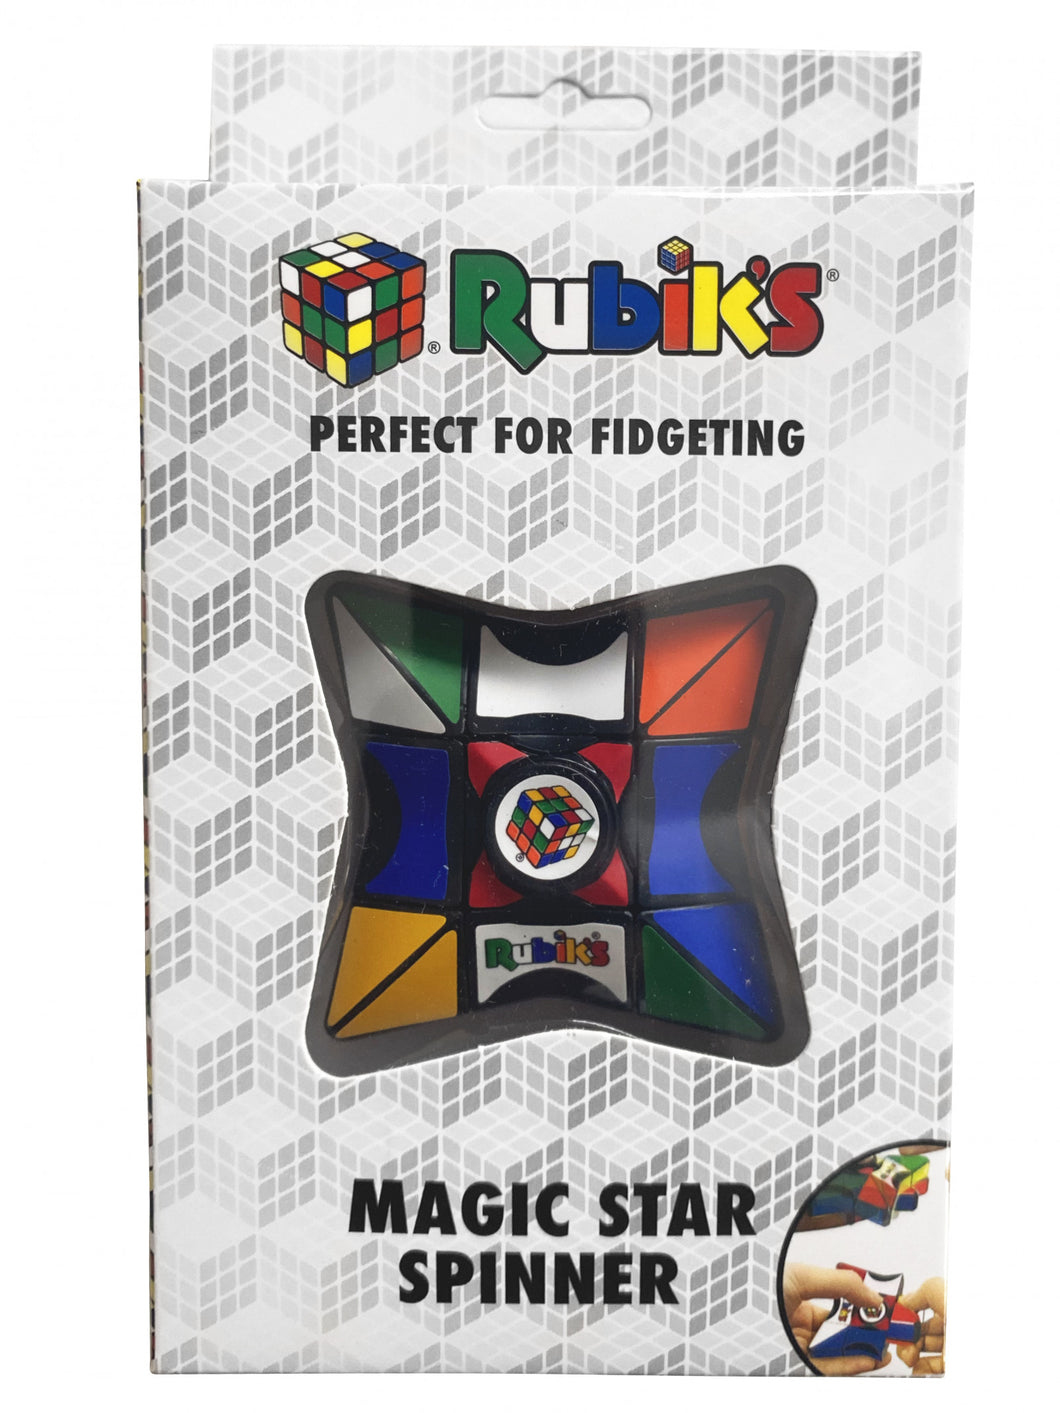 Rubiks Magic Star Spinner Fidget Toy Age 5 Up